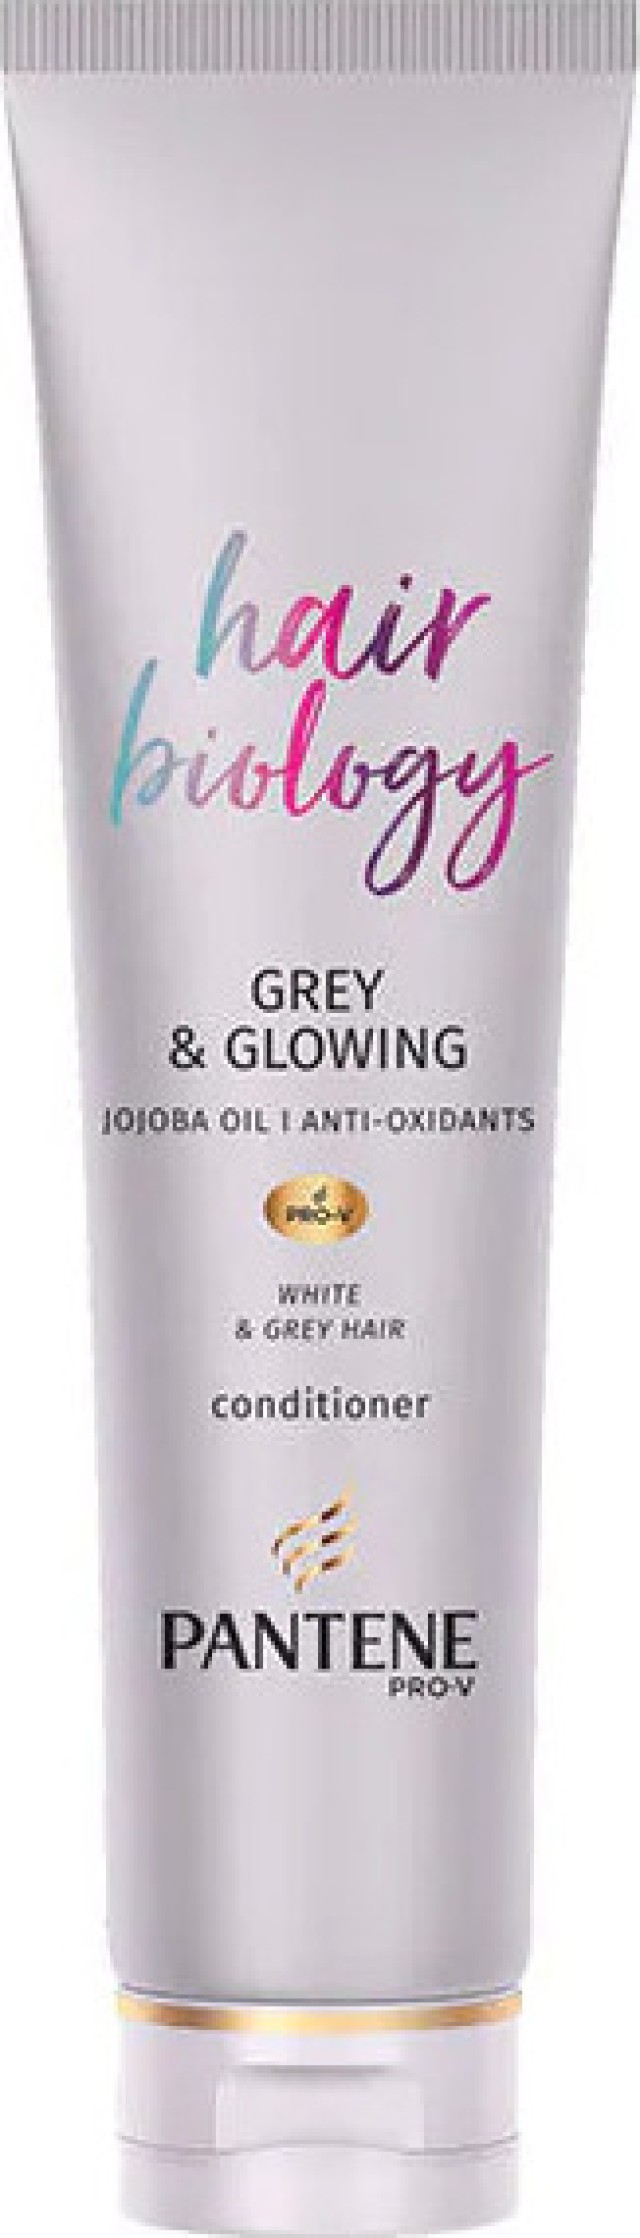 Pantene Pro V Hair Biology Grey & Glowing Conditioner Κρέμα Μαλλιών Κατά Του Κιτρινίσματος 160ml